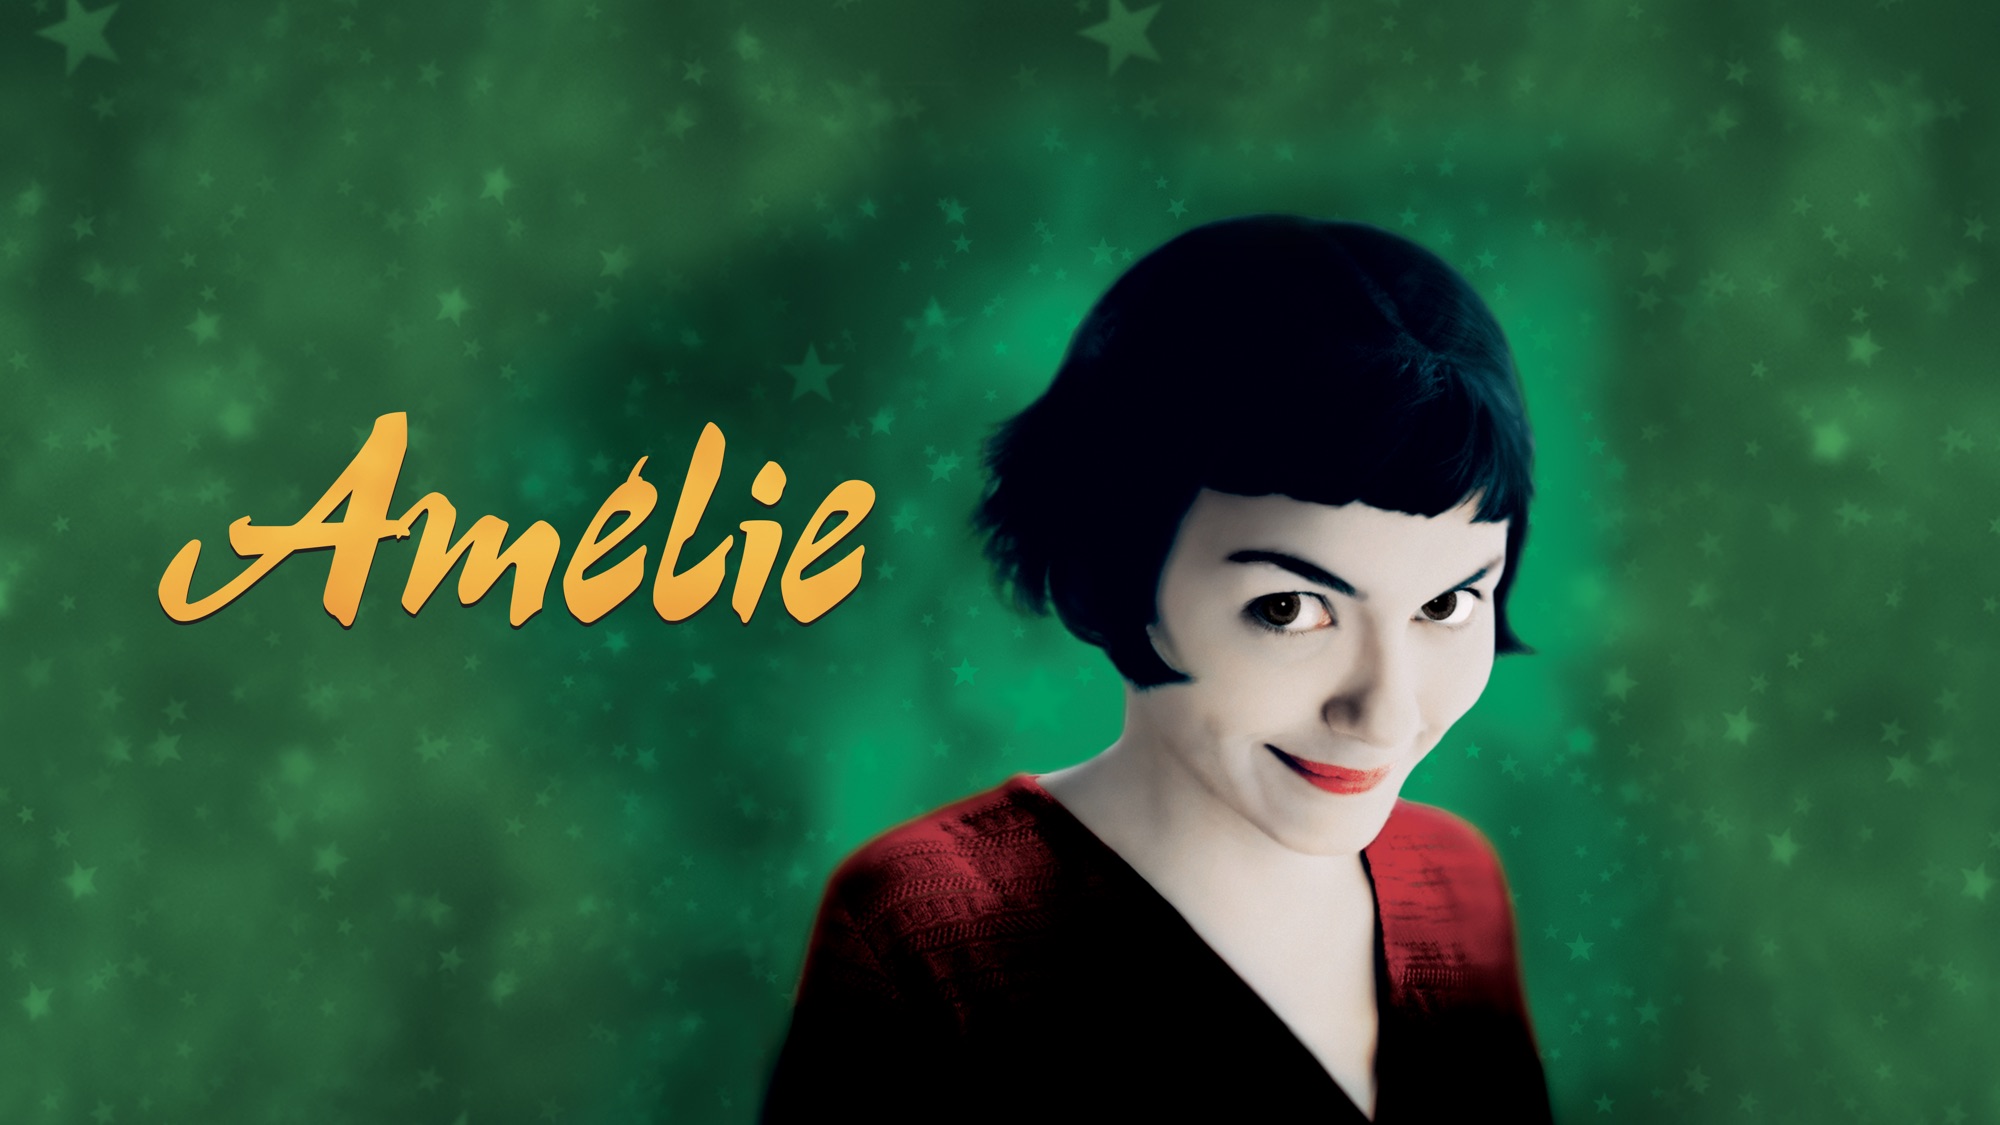 Movie Amelie HD Wallpaper | Background Image